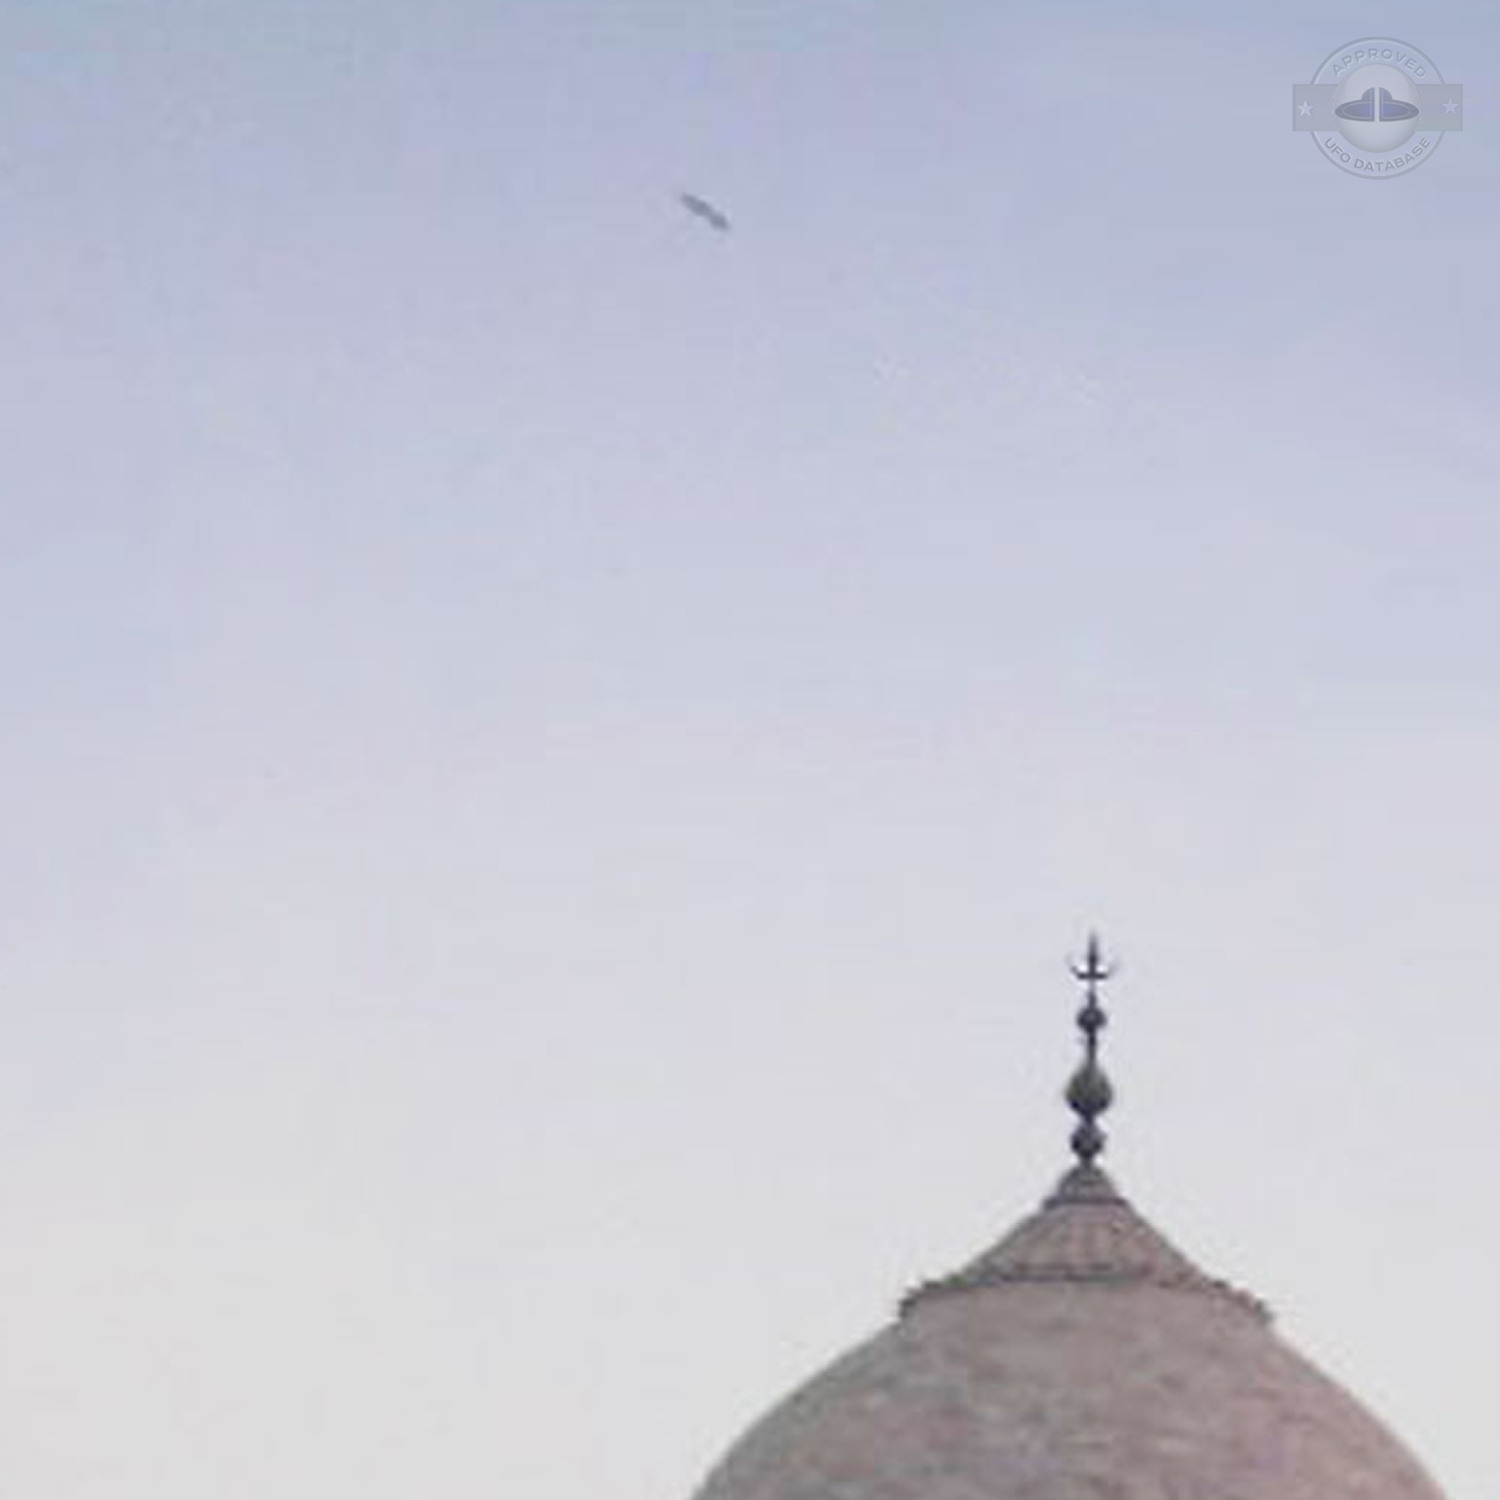 UFO over famous Taj Mahal | Agra, Uttar Pradesh | India UFO picture UFO Picture #186-3